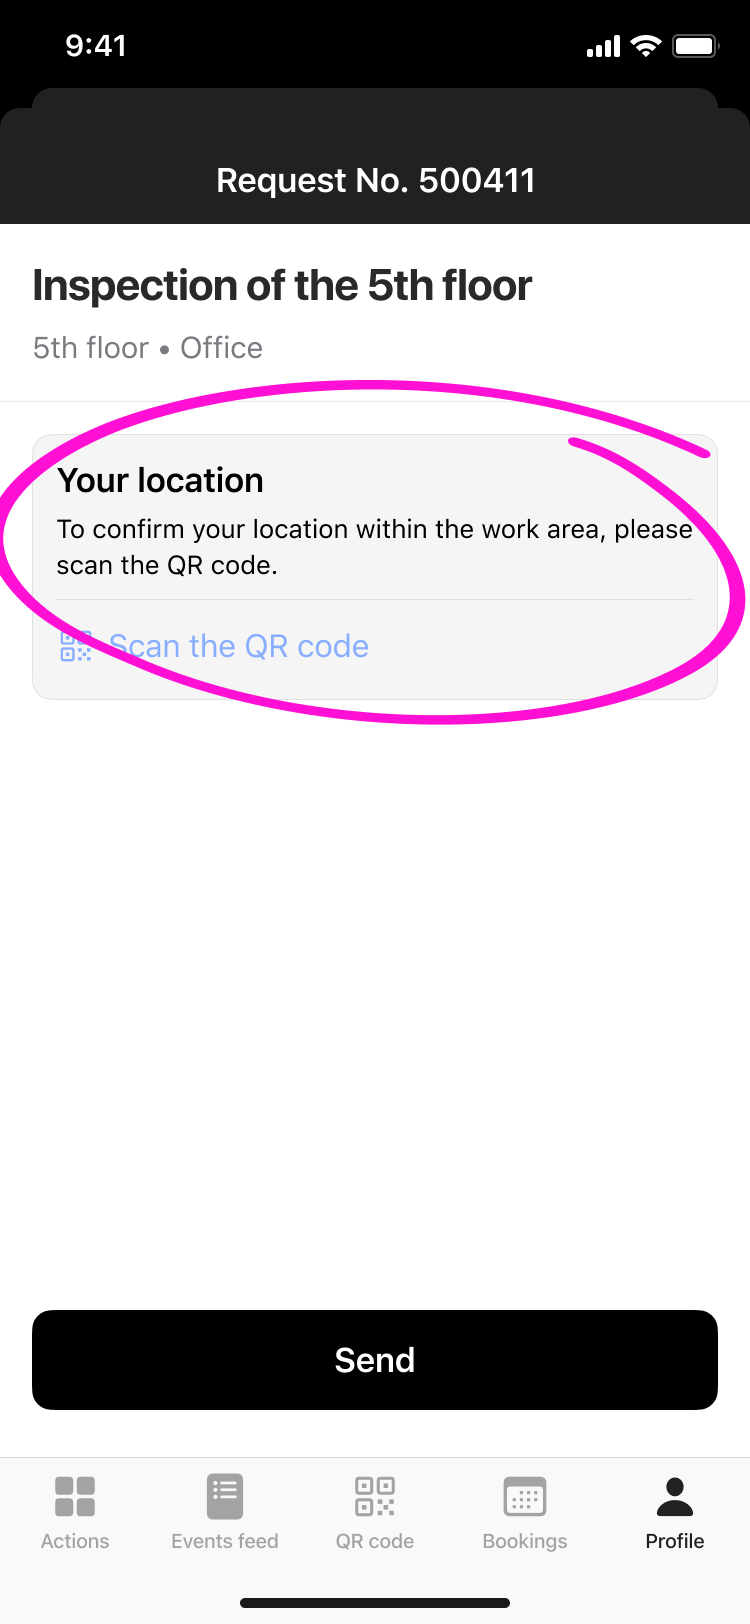 Validation of location via QR code